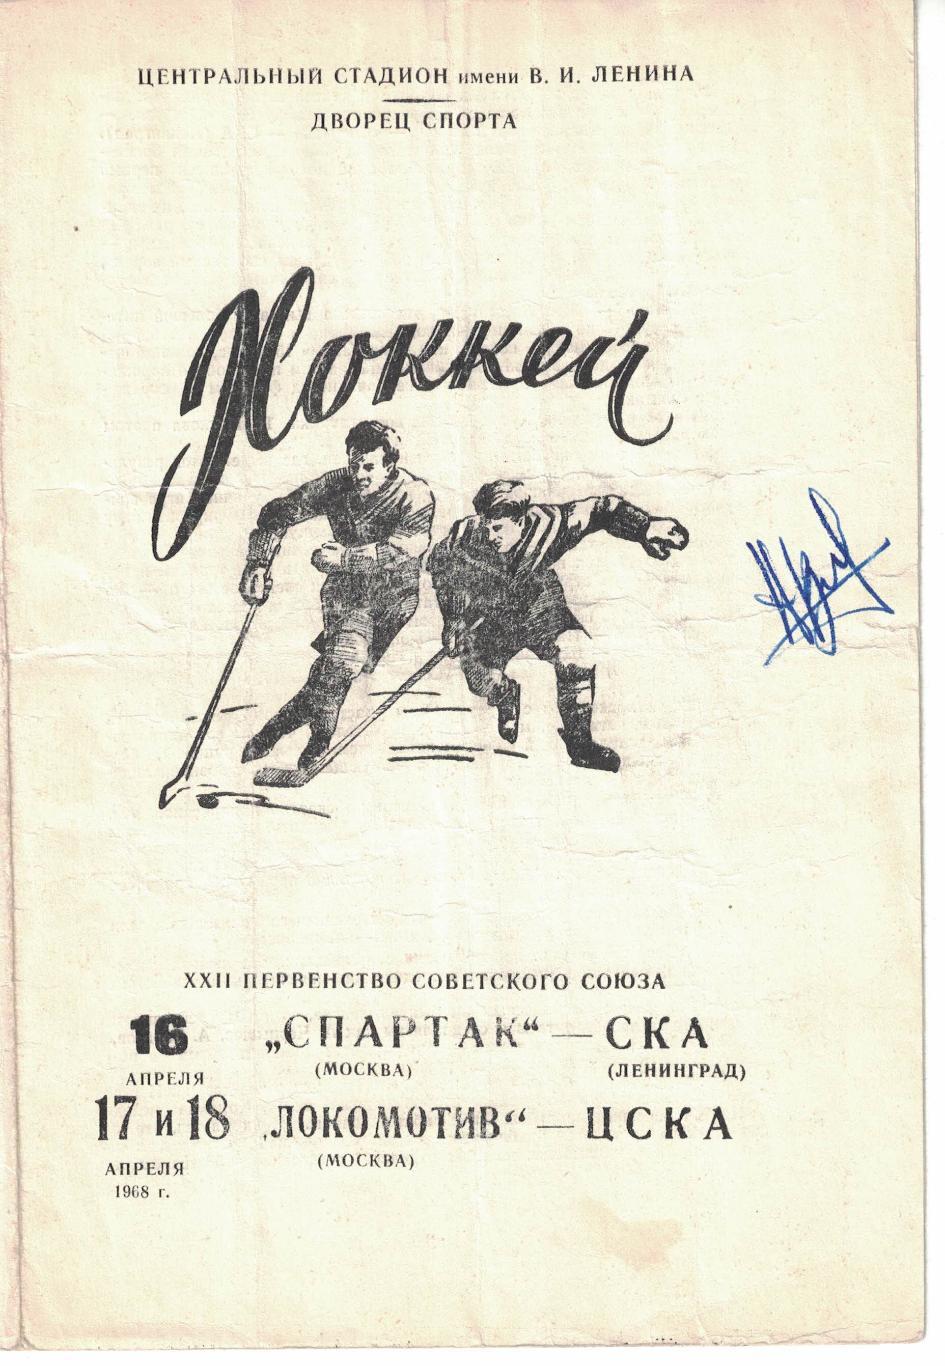 Спартак Москва - СКА Ленинград, Локомотив Москва - ЦСКА 16, 17 и 18.04.1968